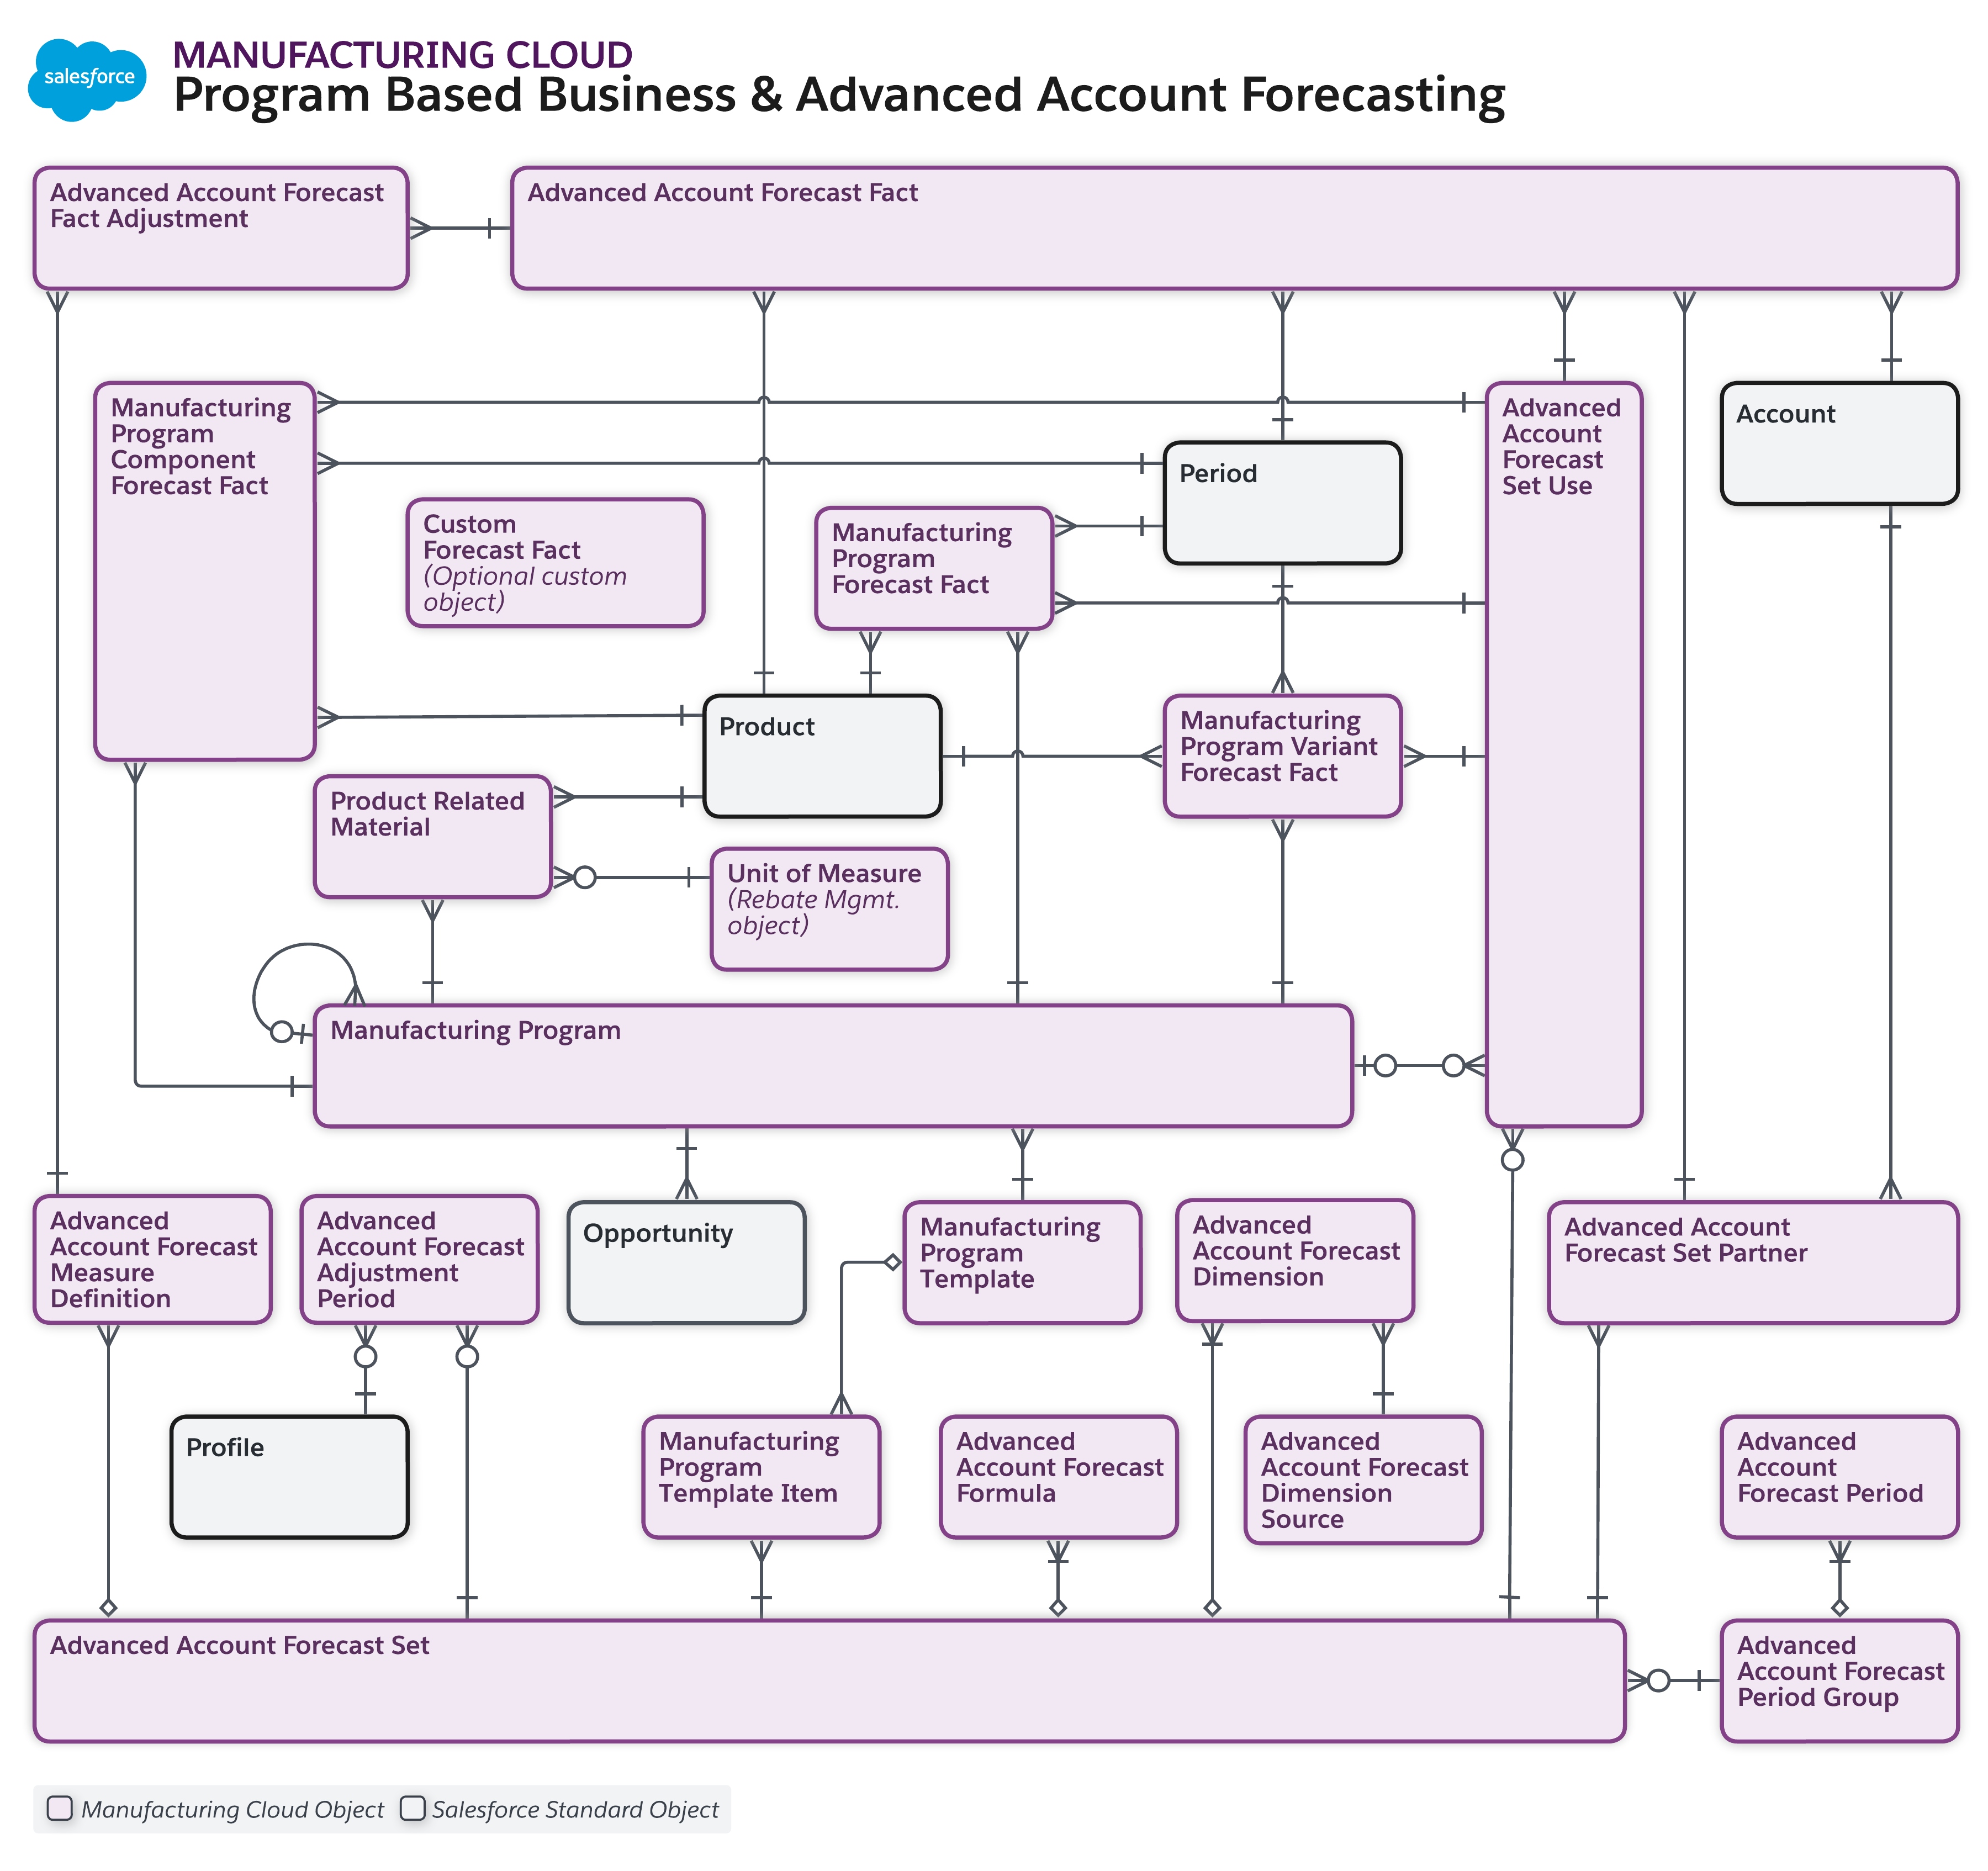 Program Based Business & Advanced Account Forecasting